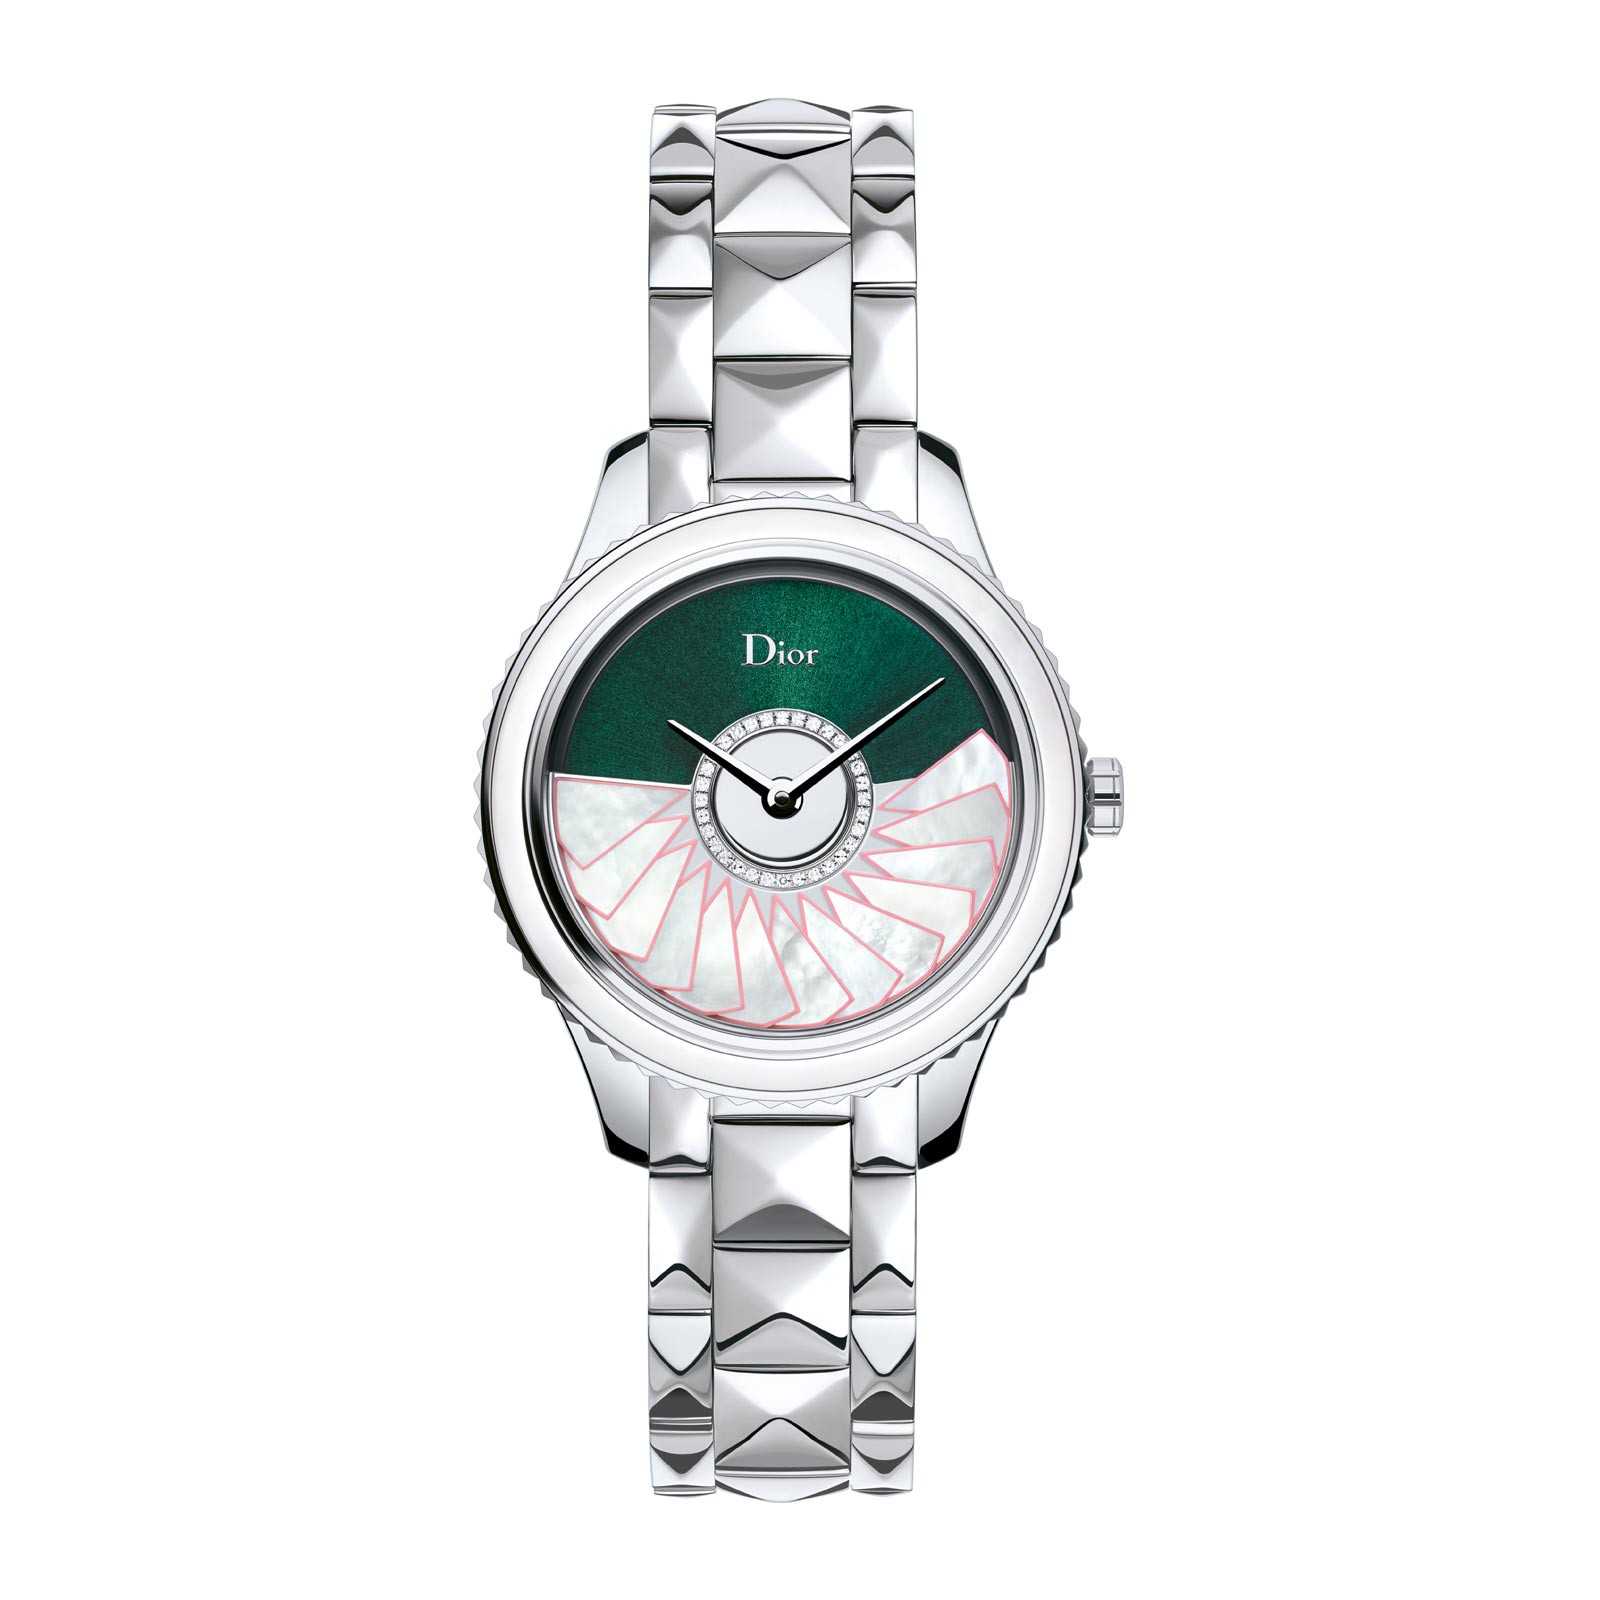 Dior VIII Grand Bal "Plissé Soleil"Wrist watch